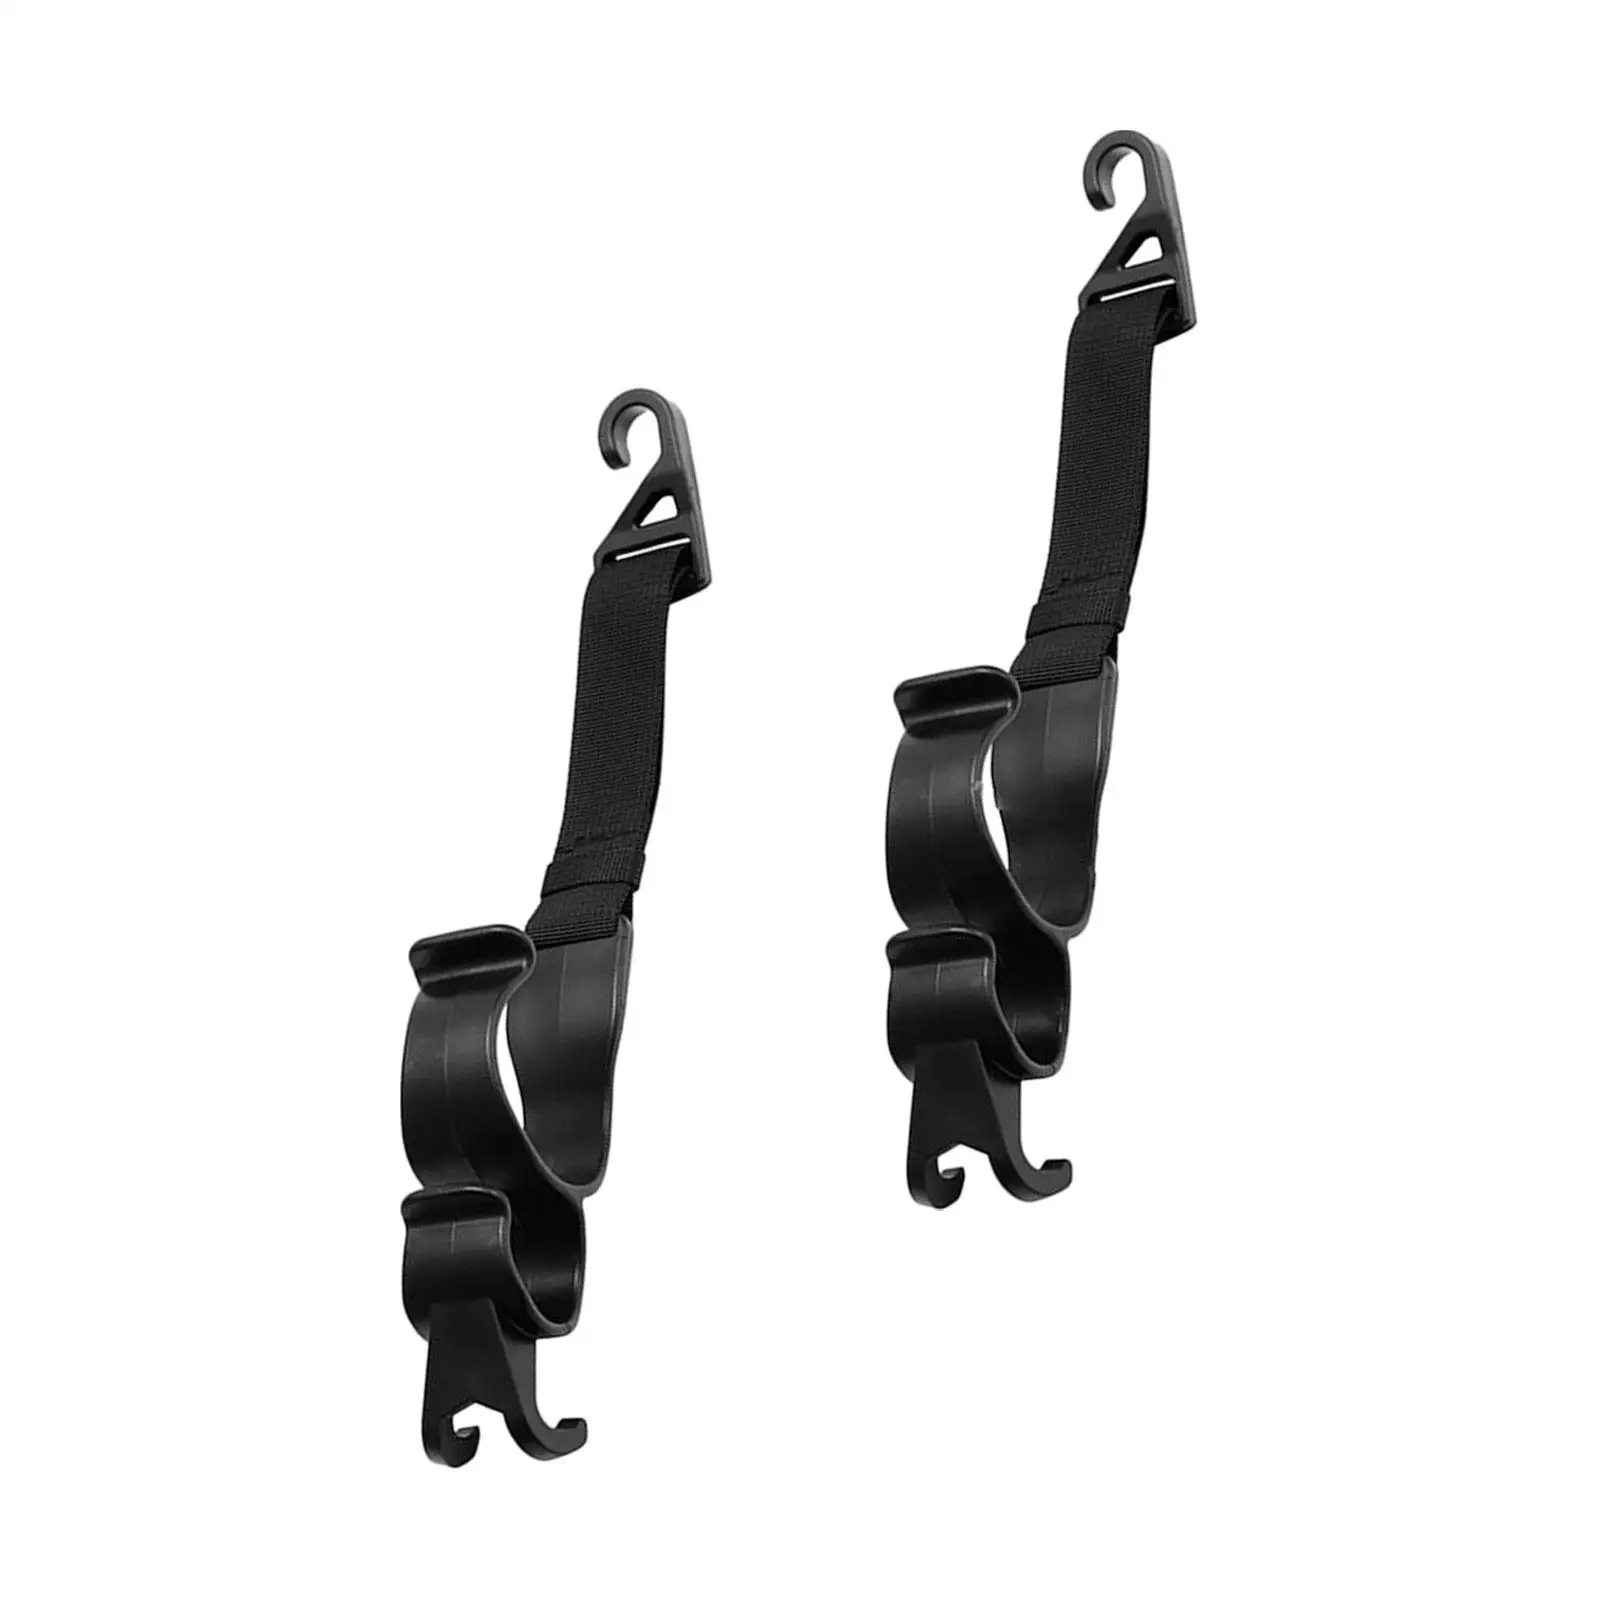 2x Adjustable Seat Hooks Car Purse Holder Hook Organizer Strong Seat Back Hook